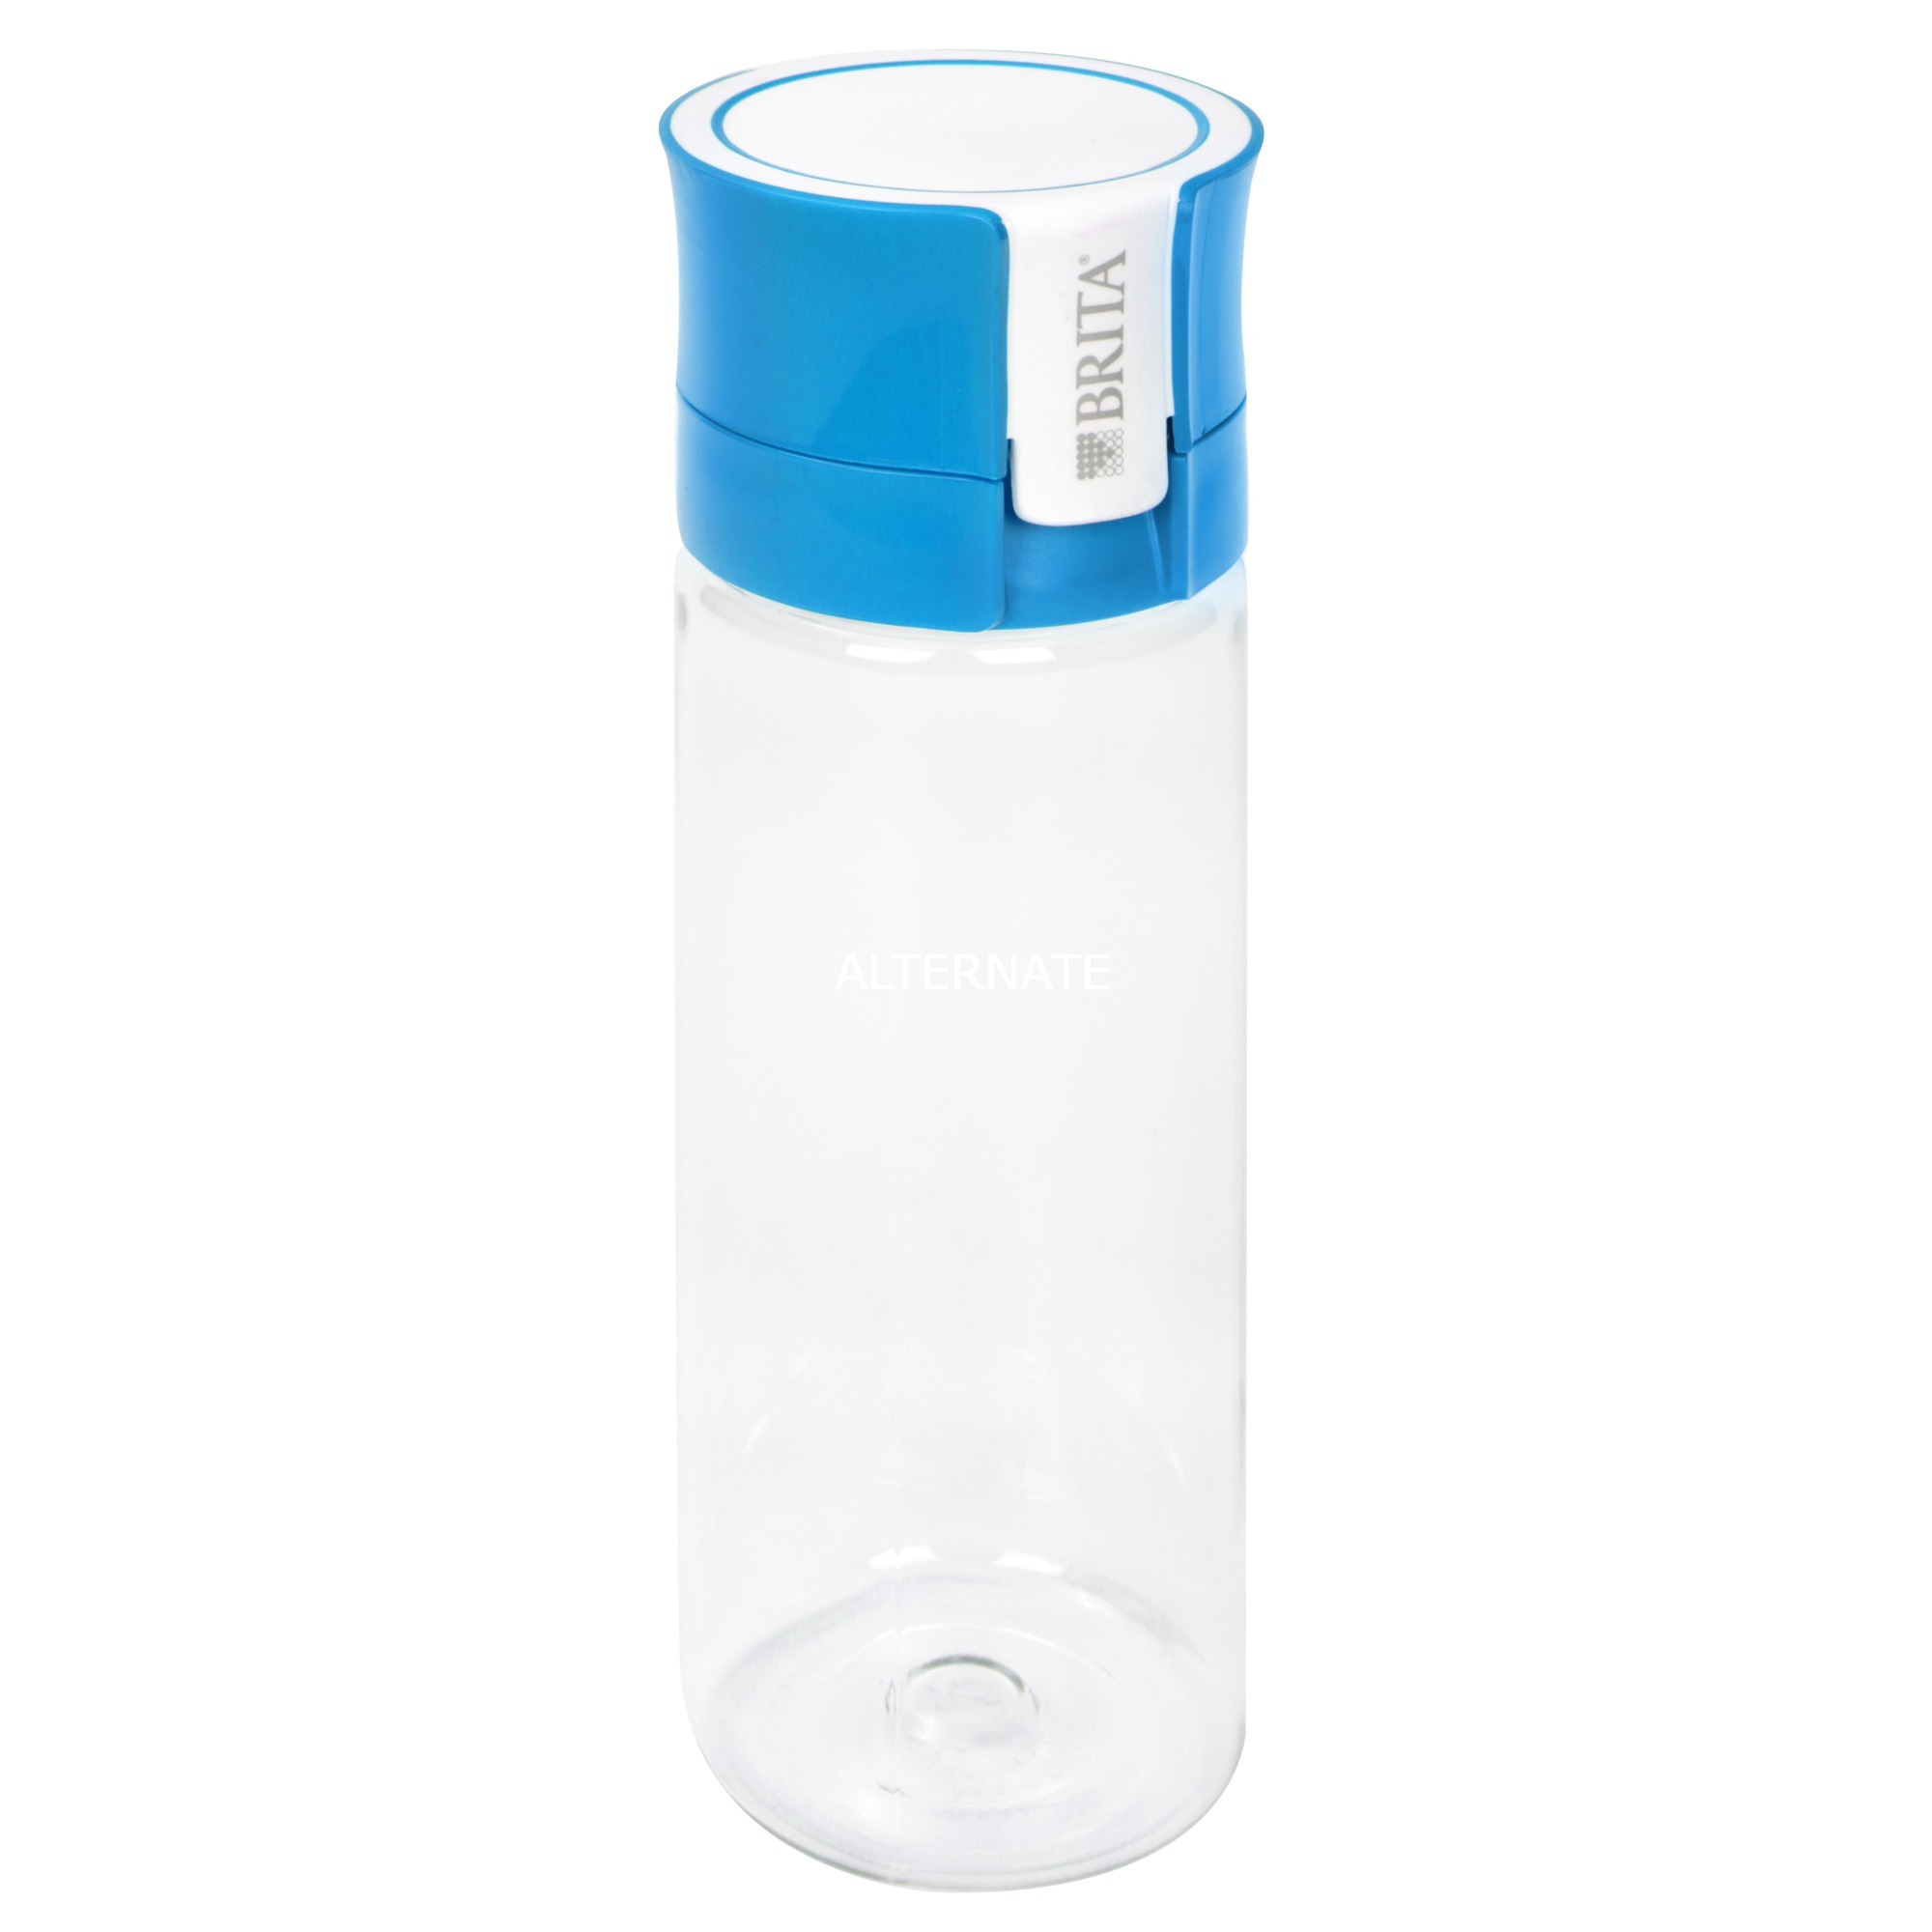 Fill&Go Bottle Filtr Blue Butelka filtruj?ca wod? Niebieski, Przezroczysty, Filtr do wody